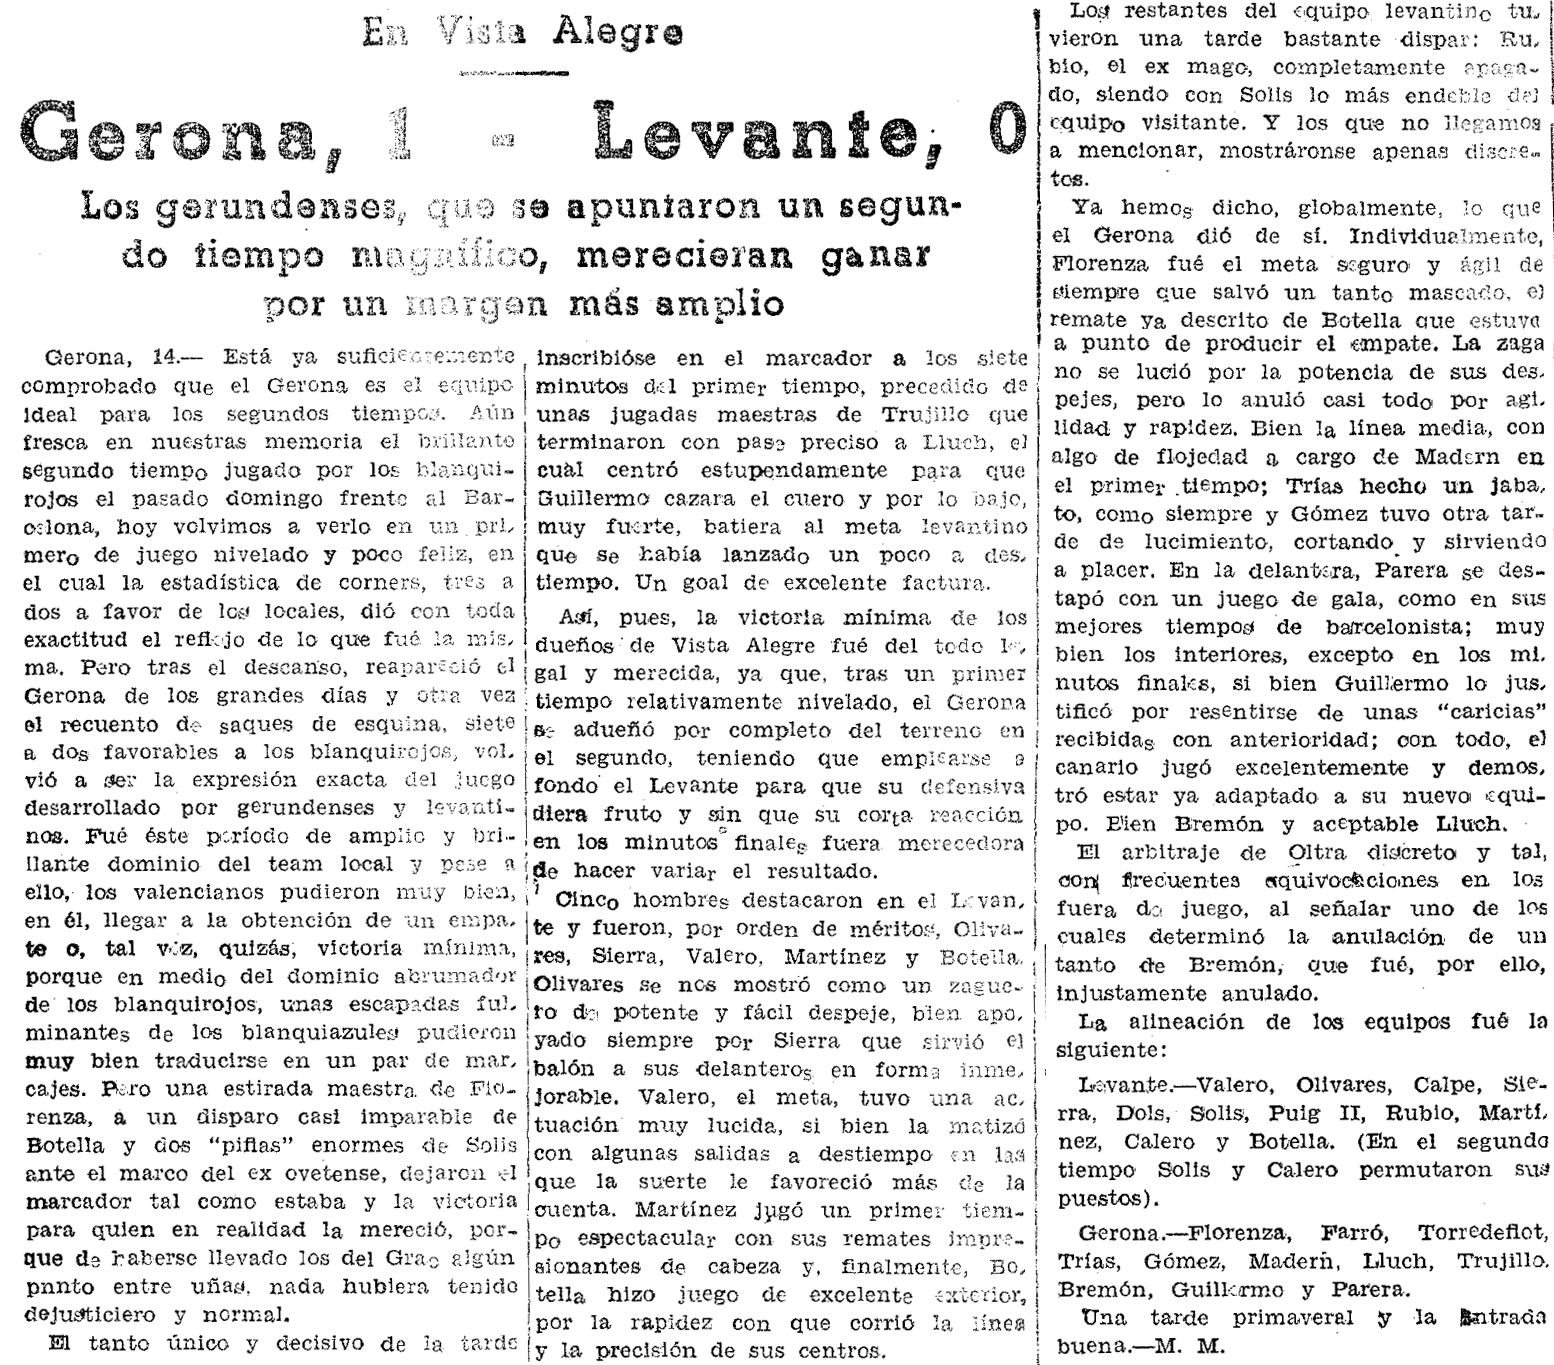 1937.02.14 (14 февраля 1937), Жирона - Леванте, 1-0.png